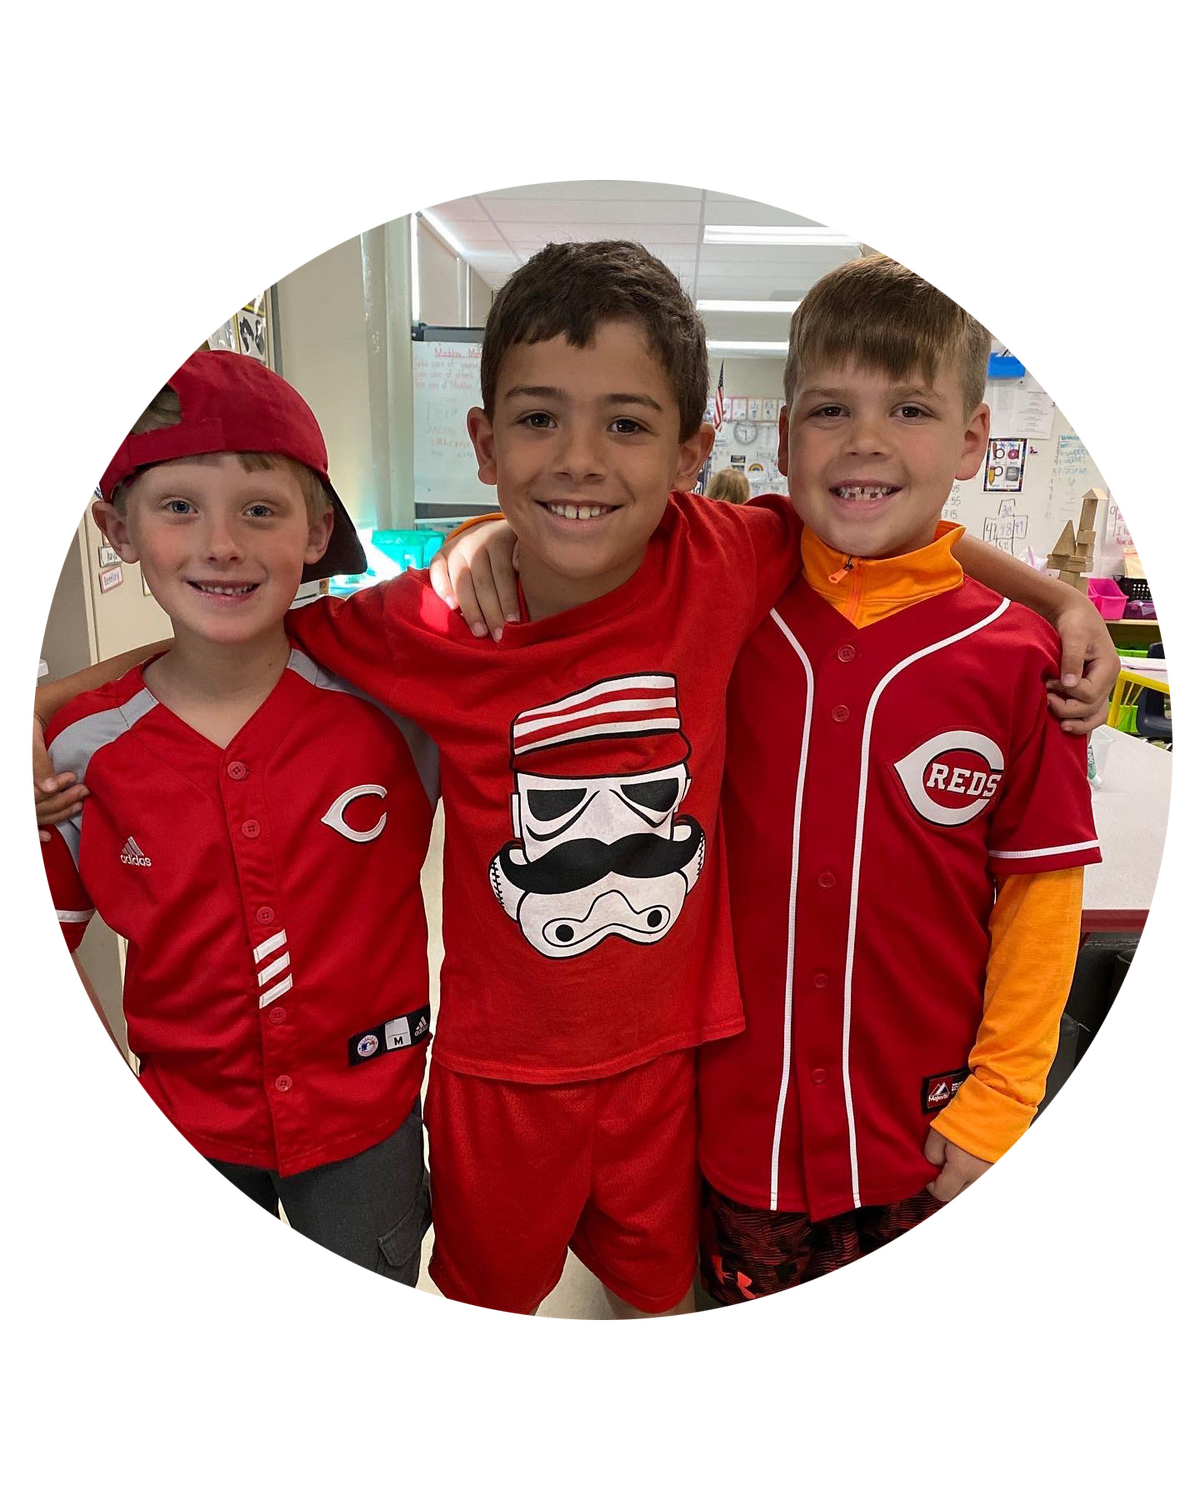 three boys wearing Red gear